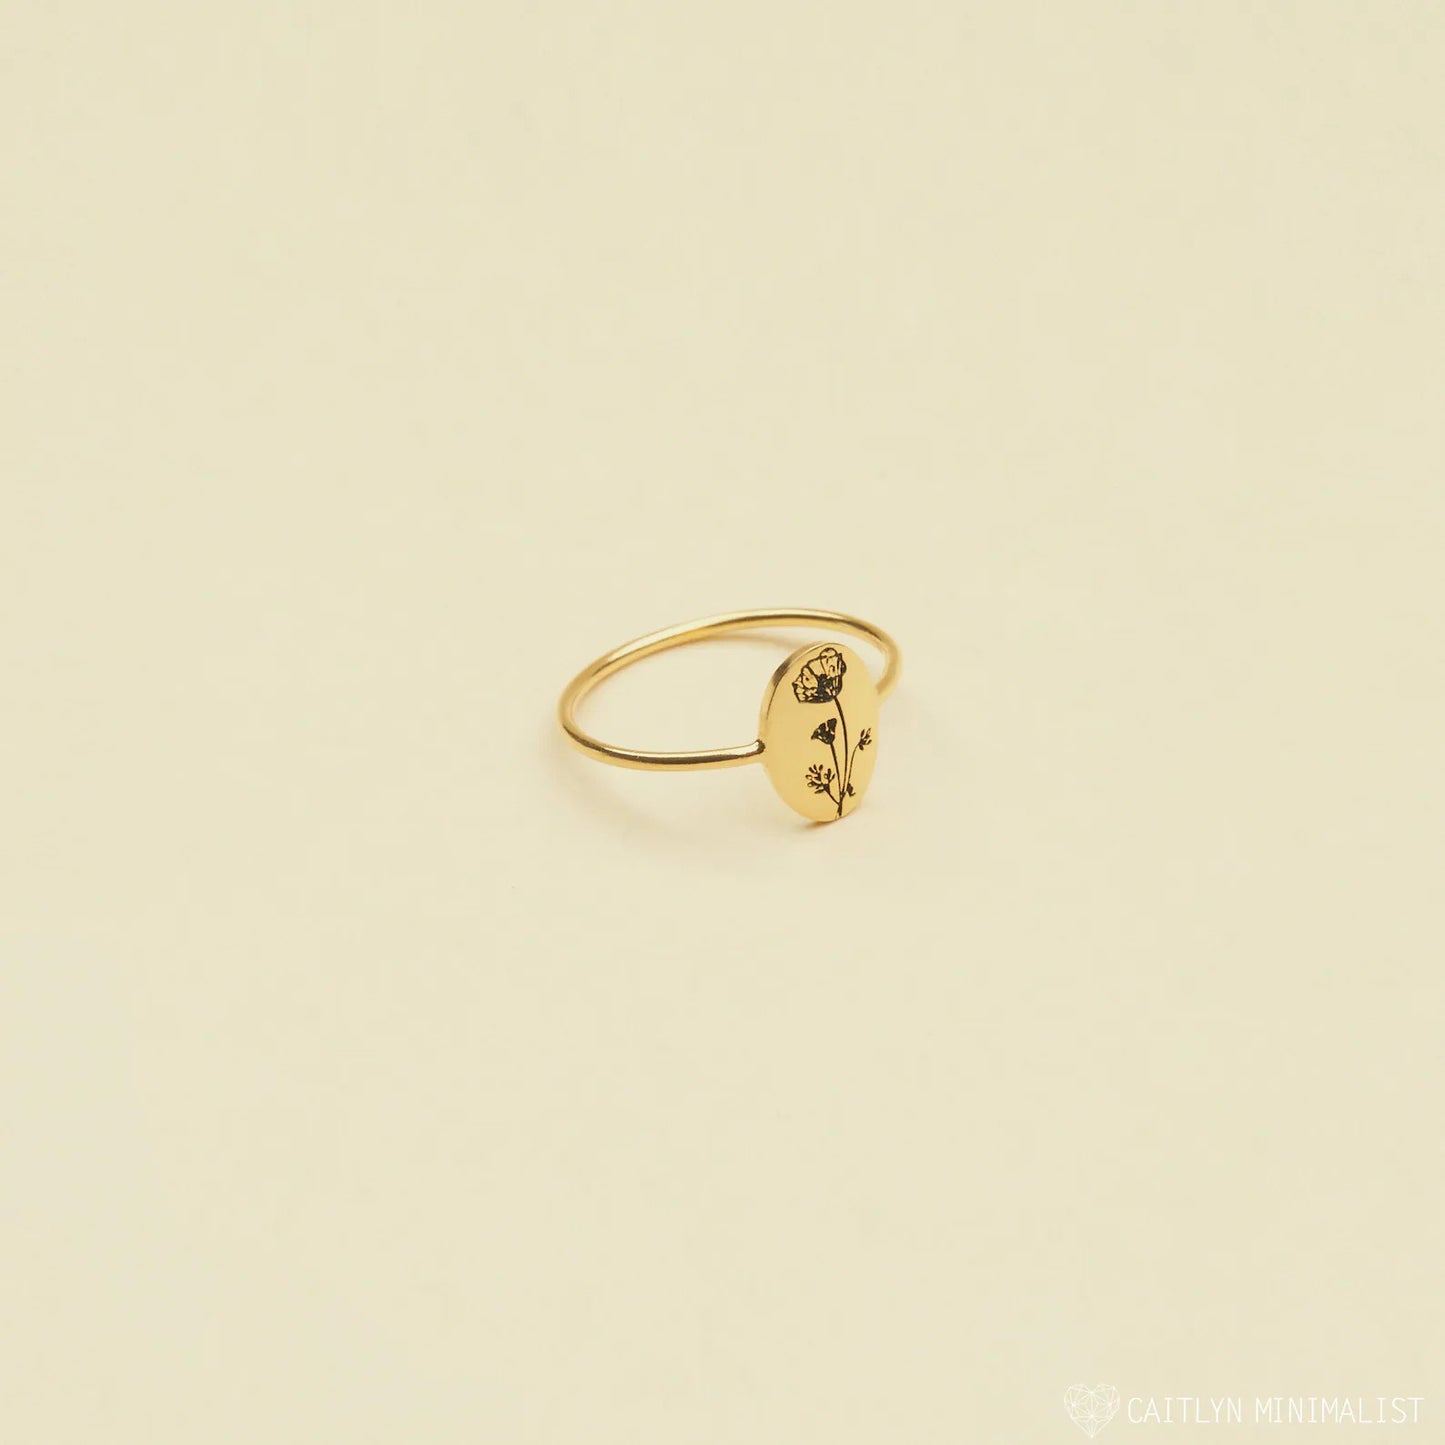 Birth Flower Engraved Ring GOLD